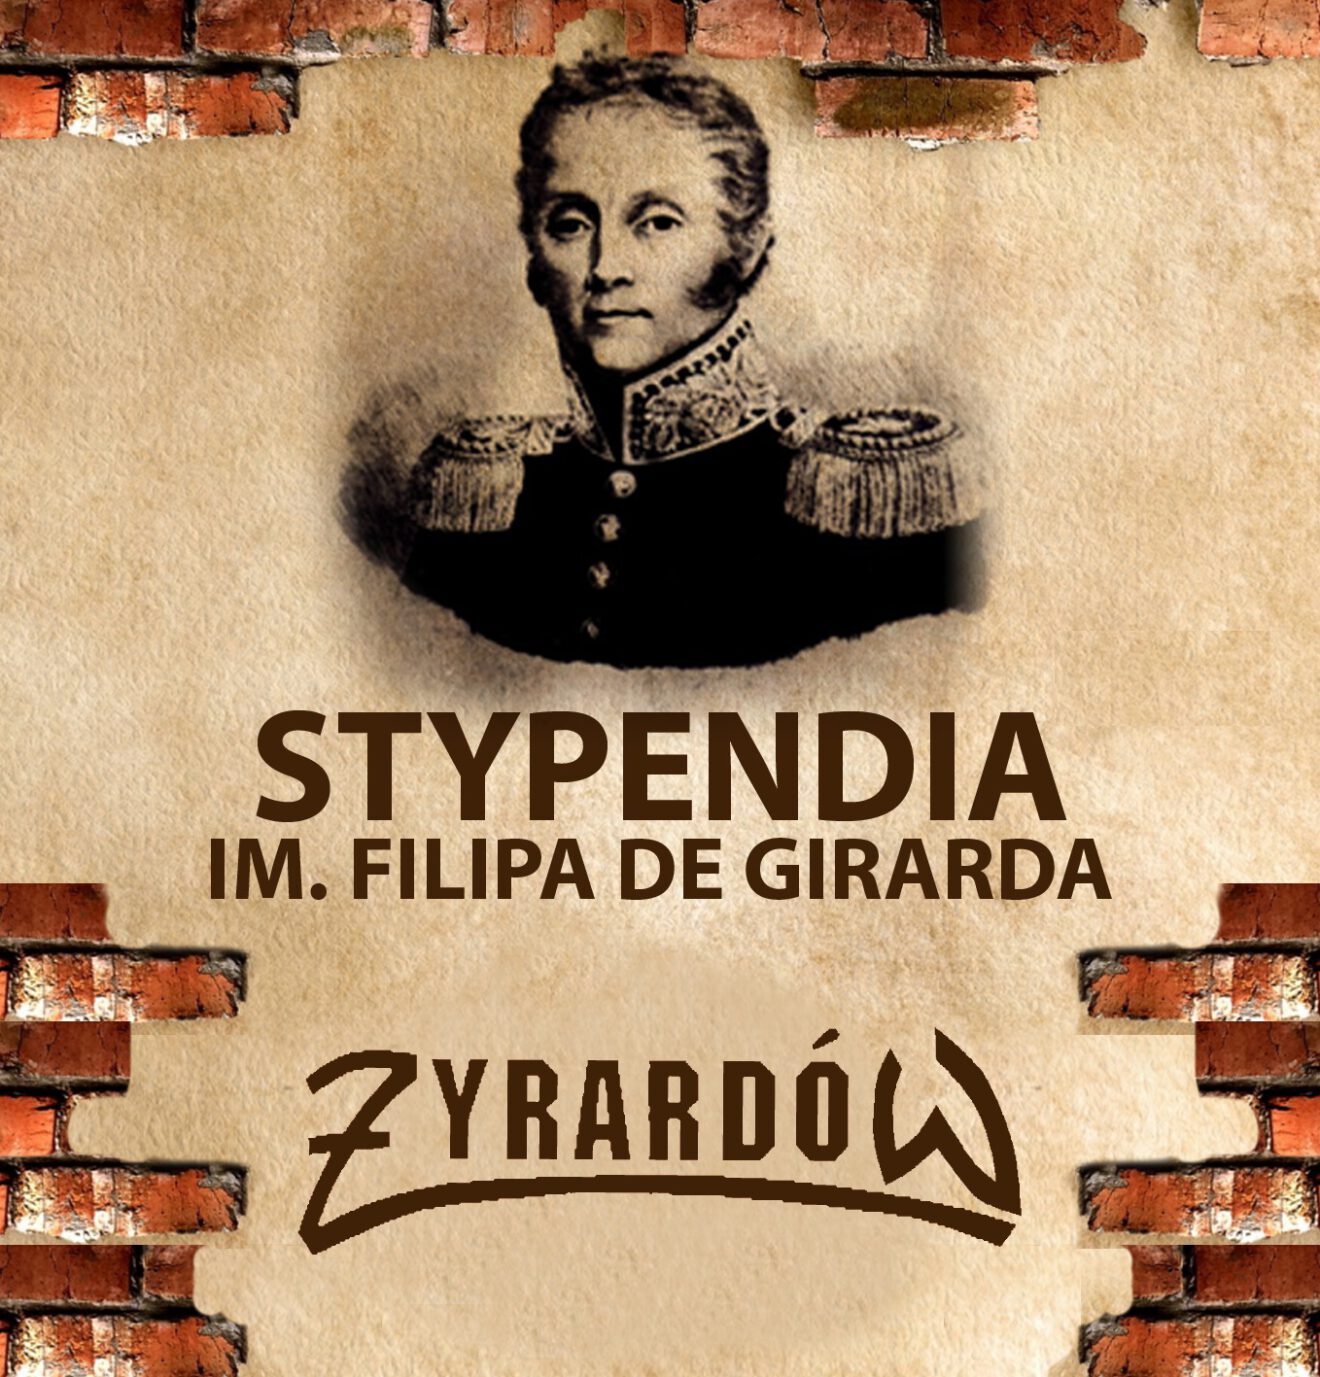 Stypendia de Girarda.jpg